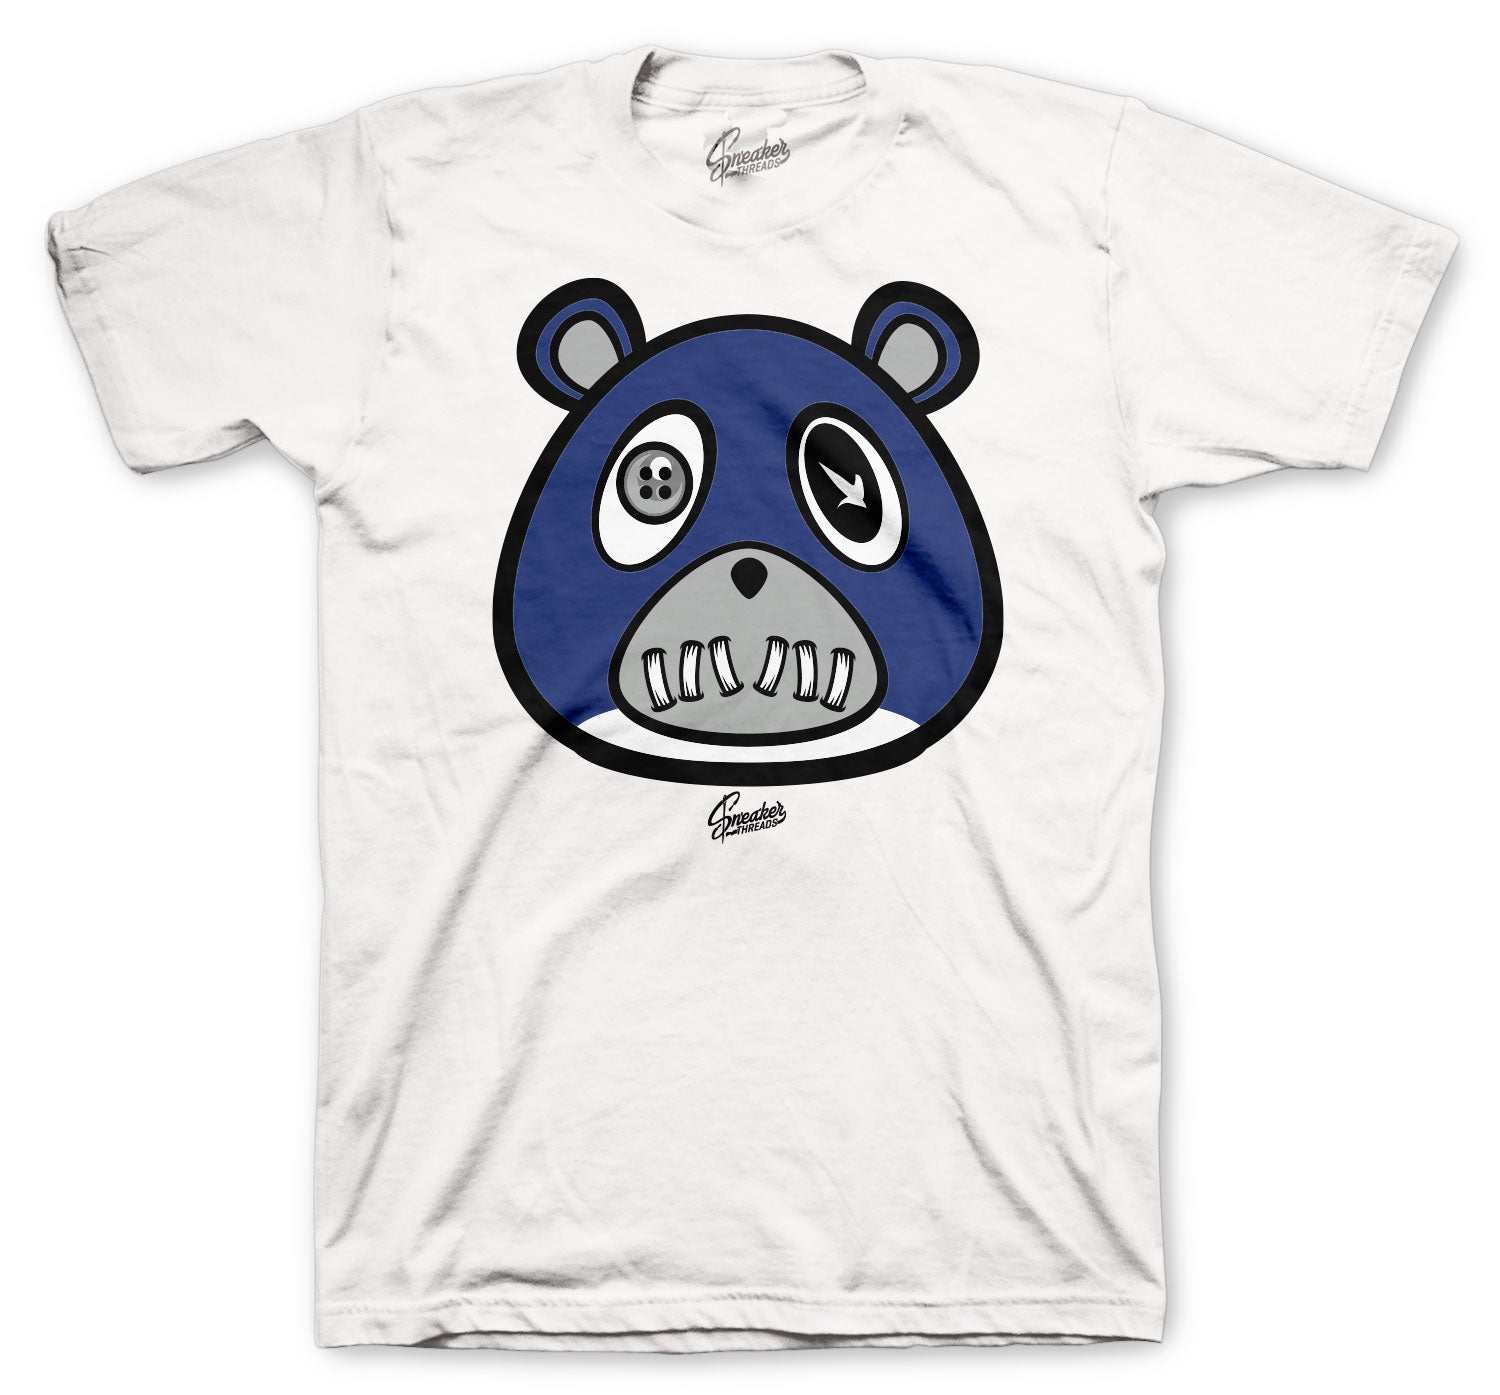 Retro 1 Midnight Navy Shirt - ST Bear - White